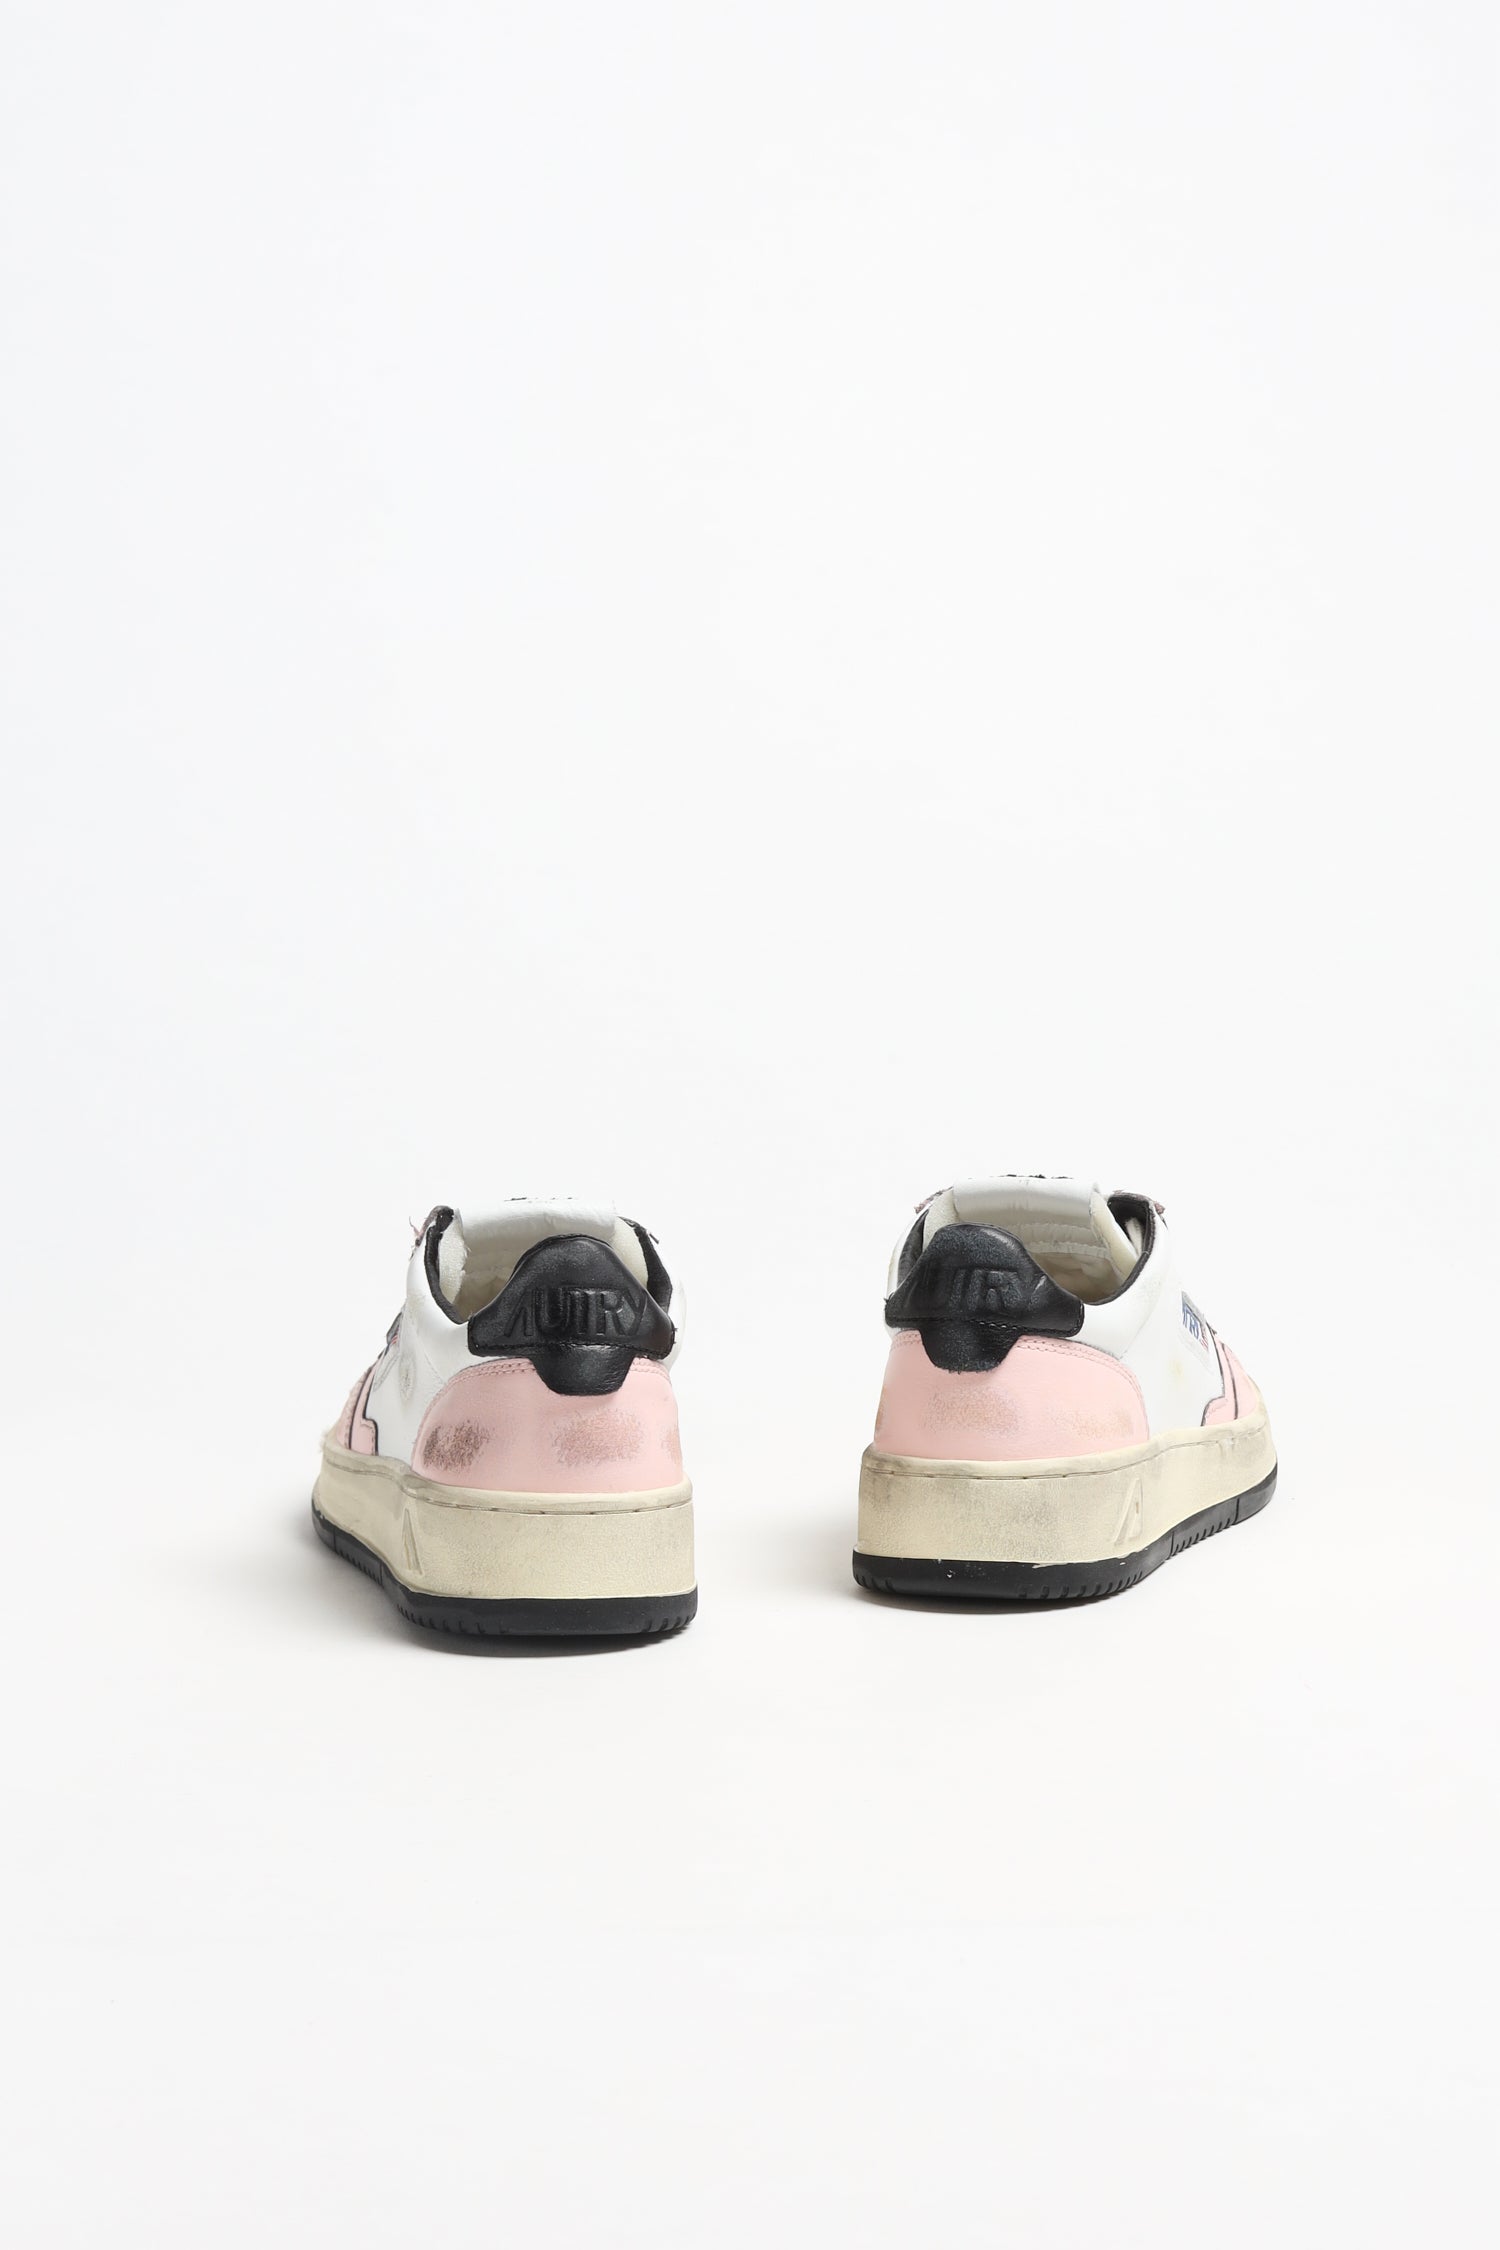 Sneaker Super Vintage in Weiß/PinkAutry - Anita Hass